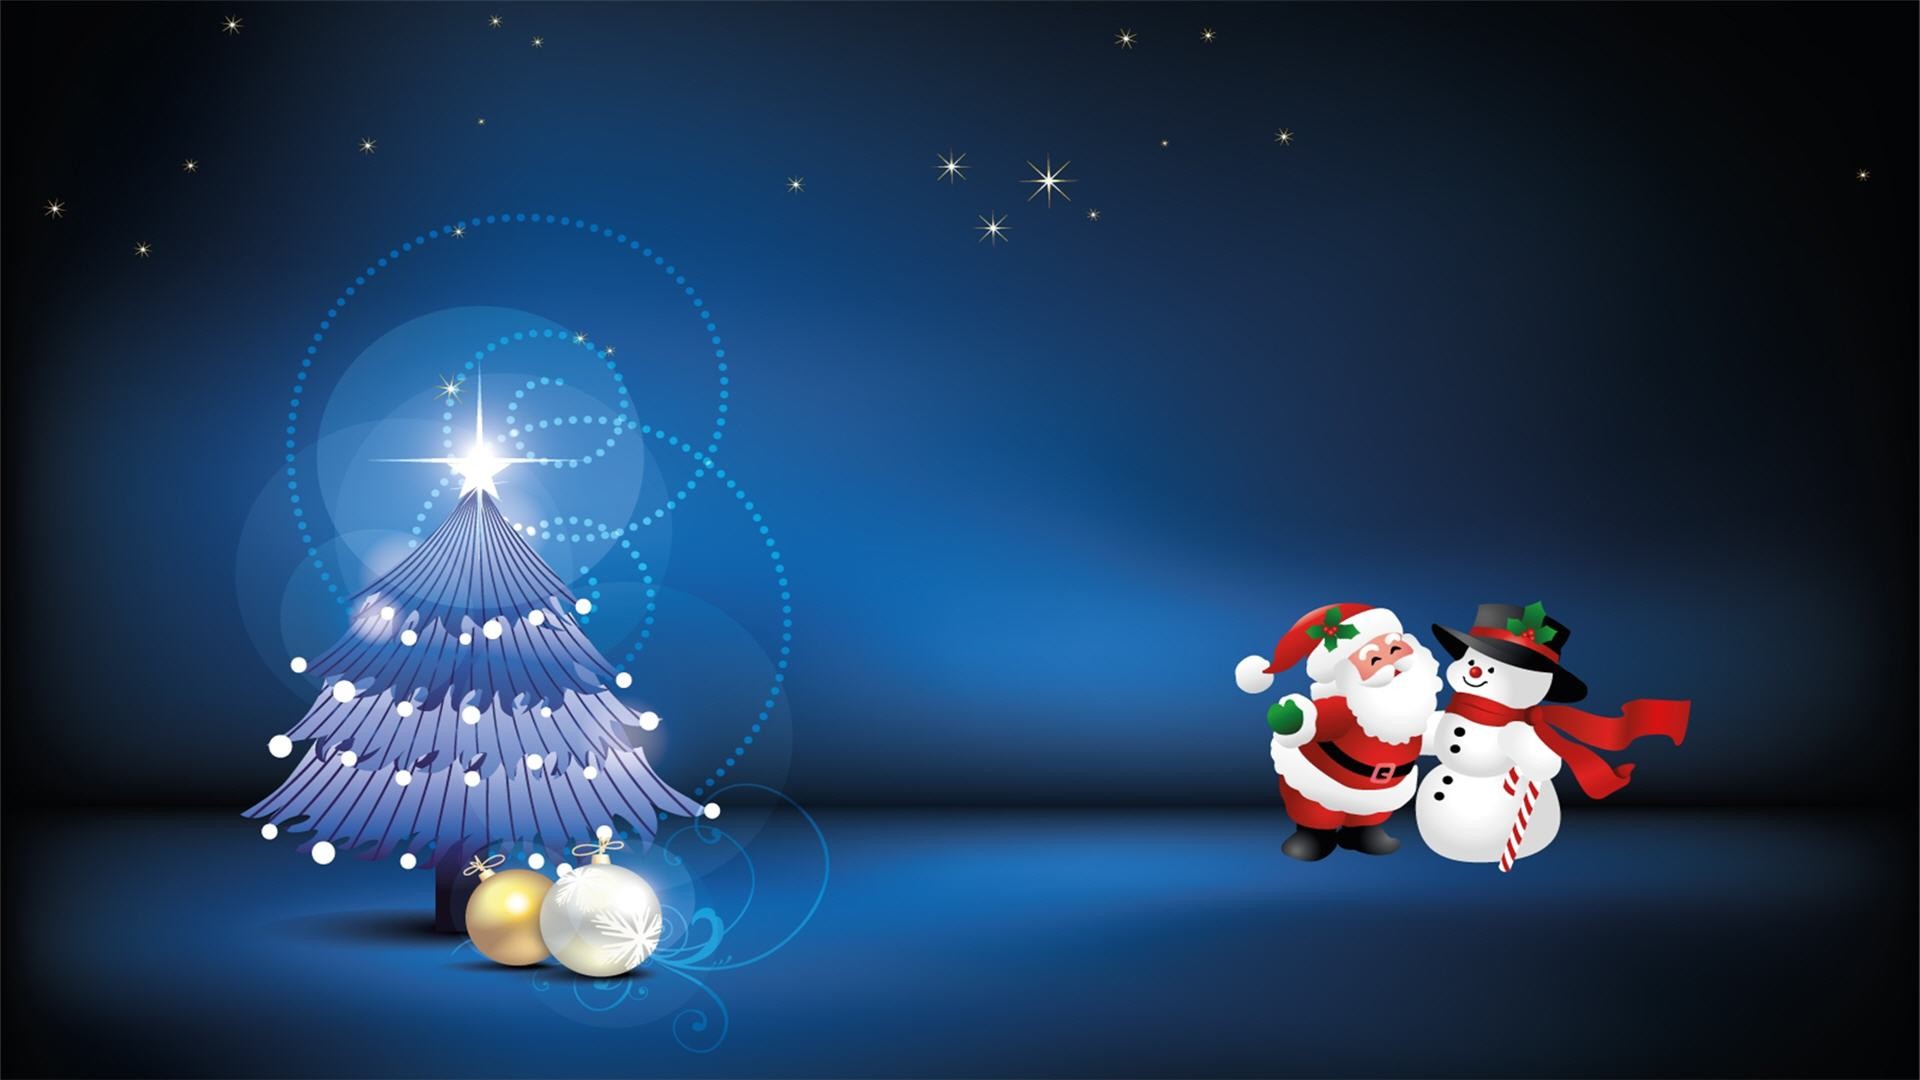 1920x1080 Full Hd Christmas Desktop Backgrounds | Merry Christmas ...